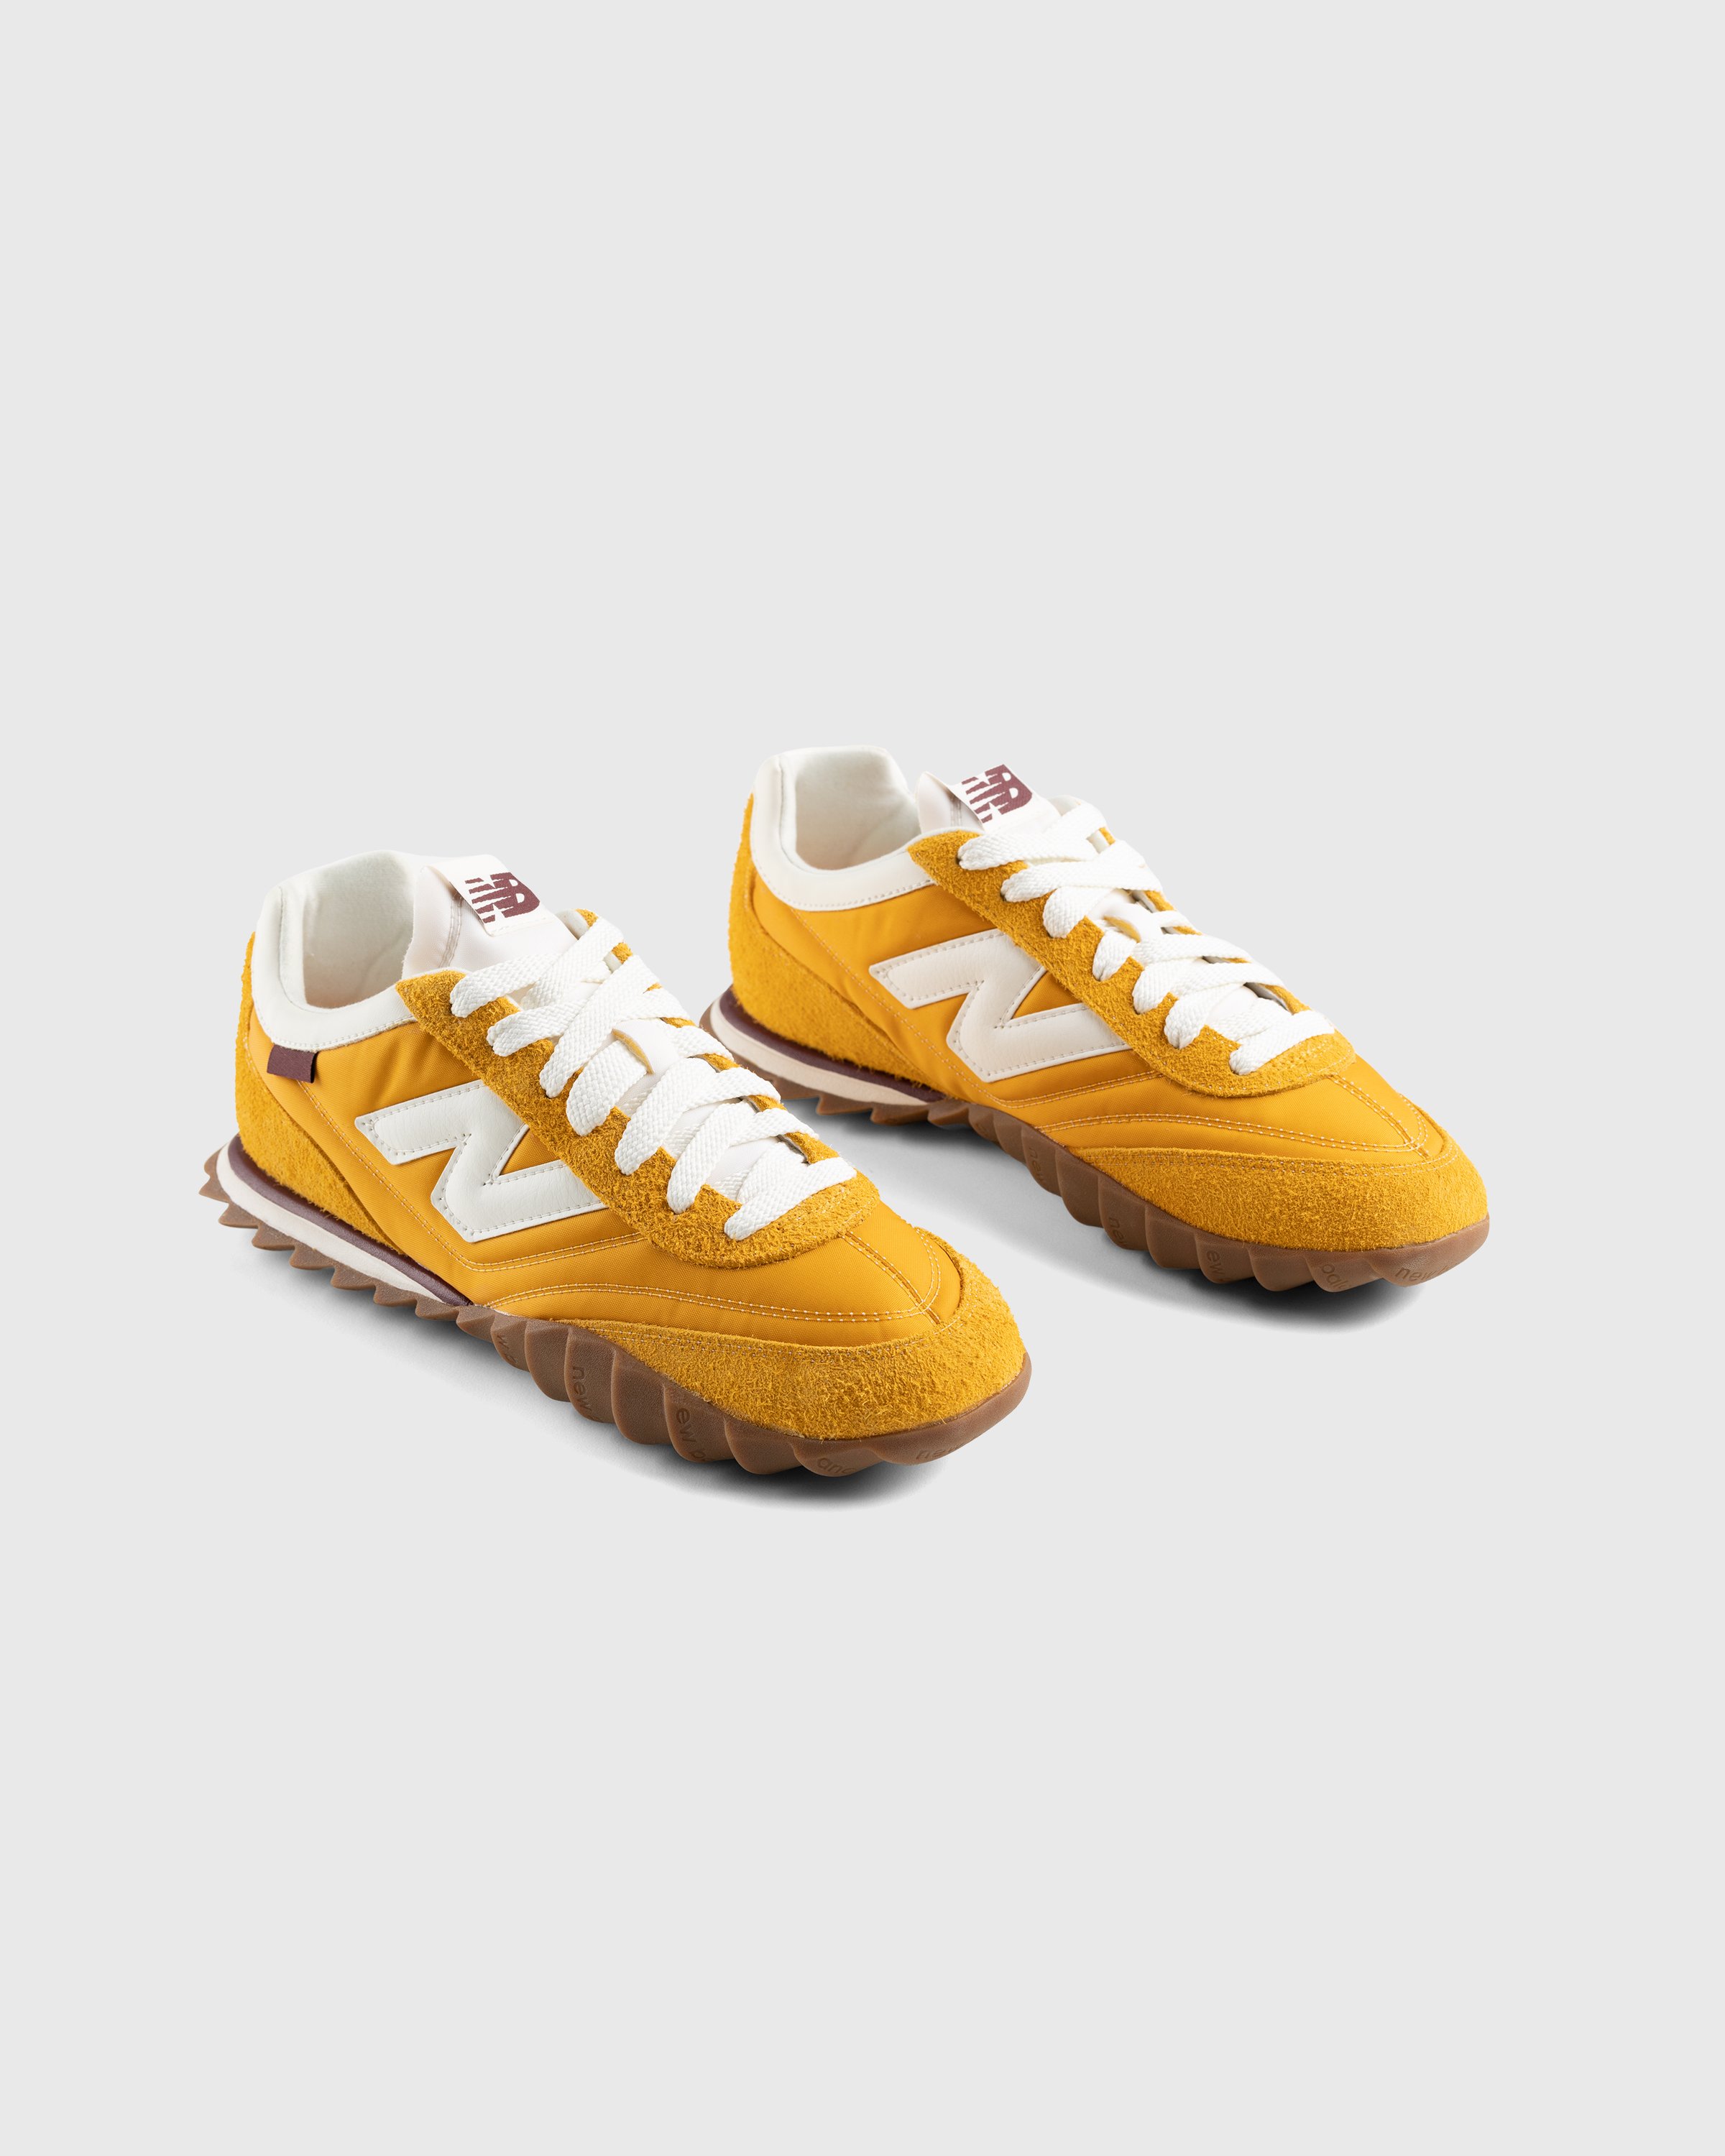 Donald Glover x New Balance - URC30GG Golden Hour - Footwear - Orange - Image 3